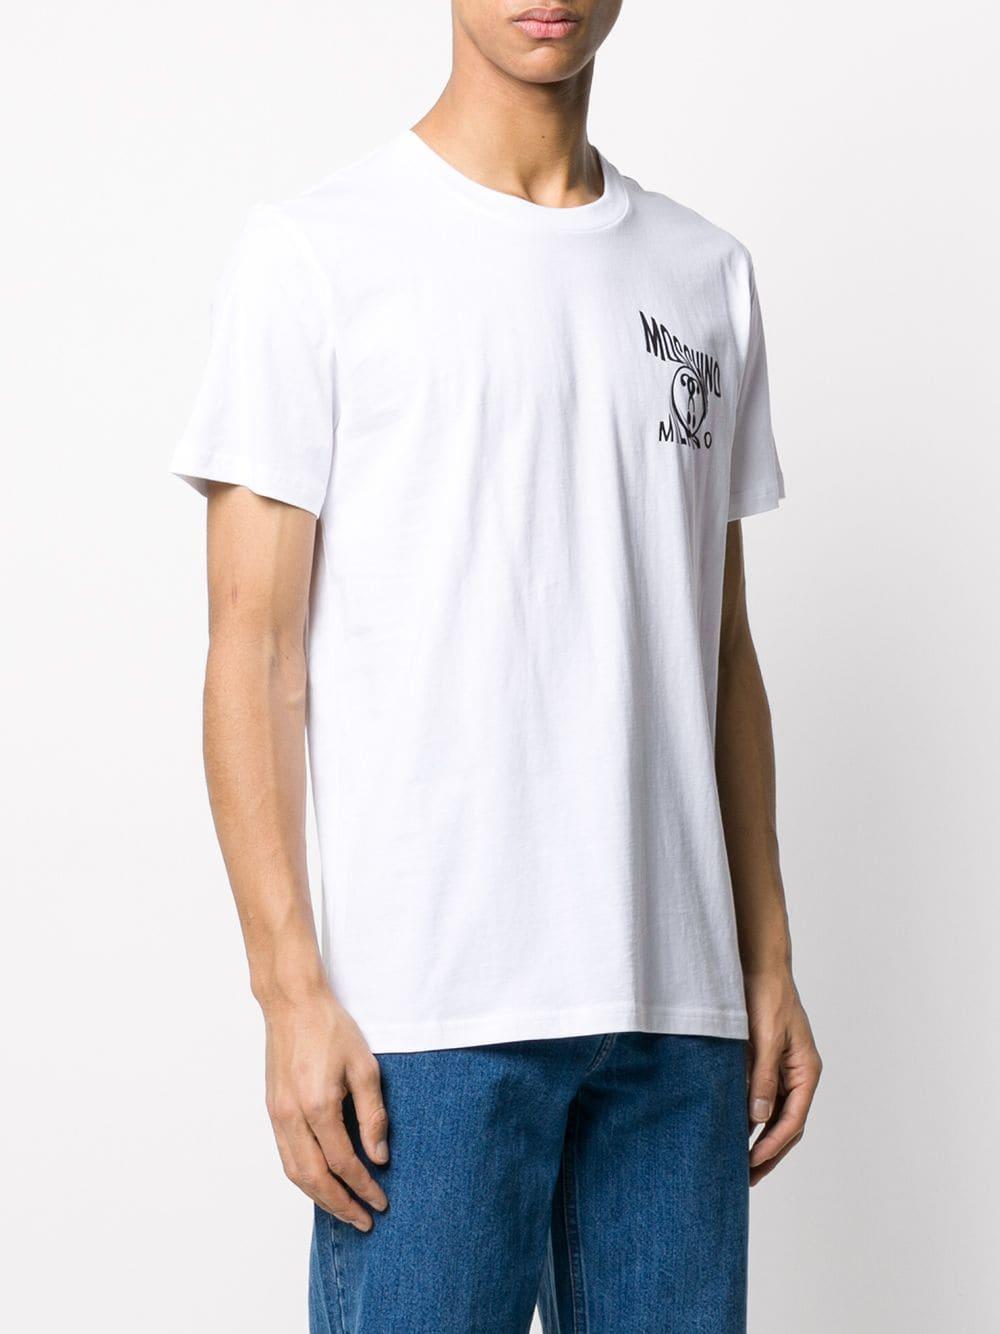 Moschino Cotton Milano Logo-print T-shirt in White for Men - Save 31% ...